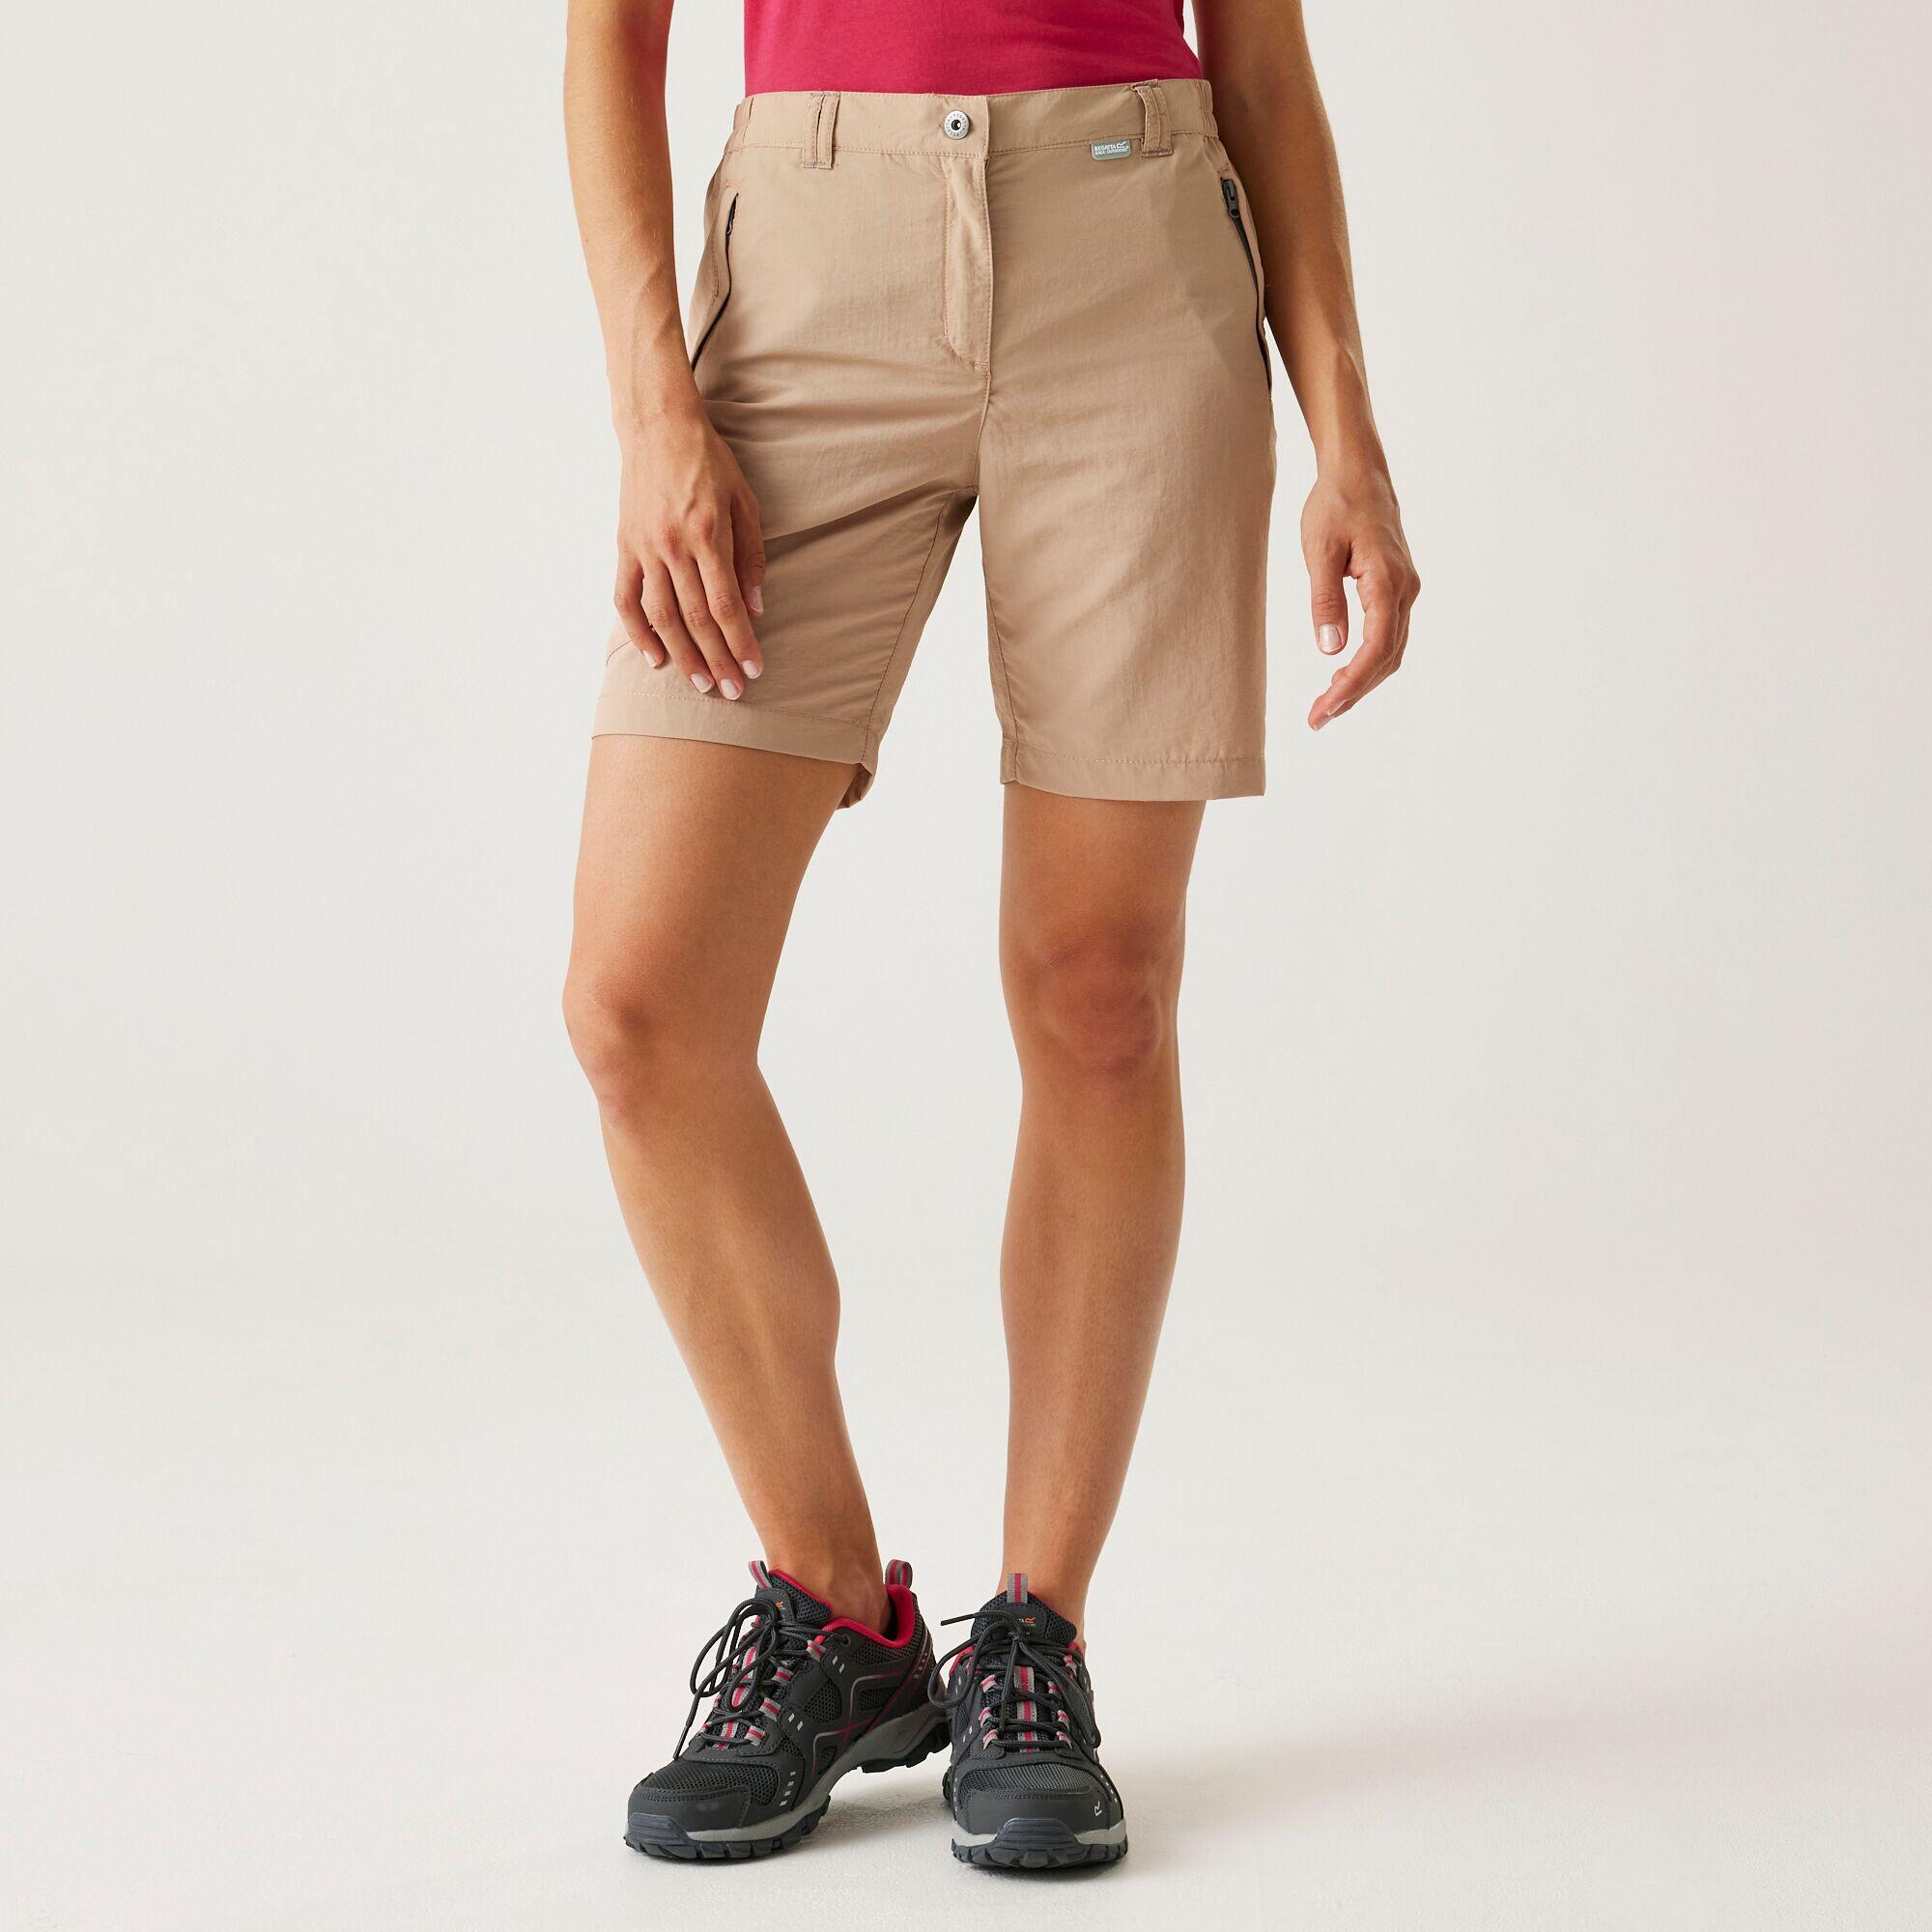 REGATTA Chaska II Women's Hiking Shorts - Beige